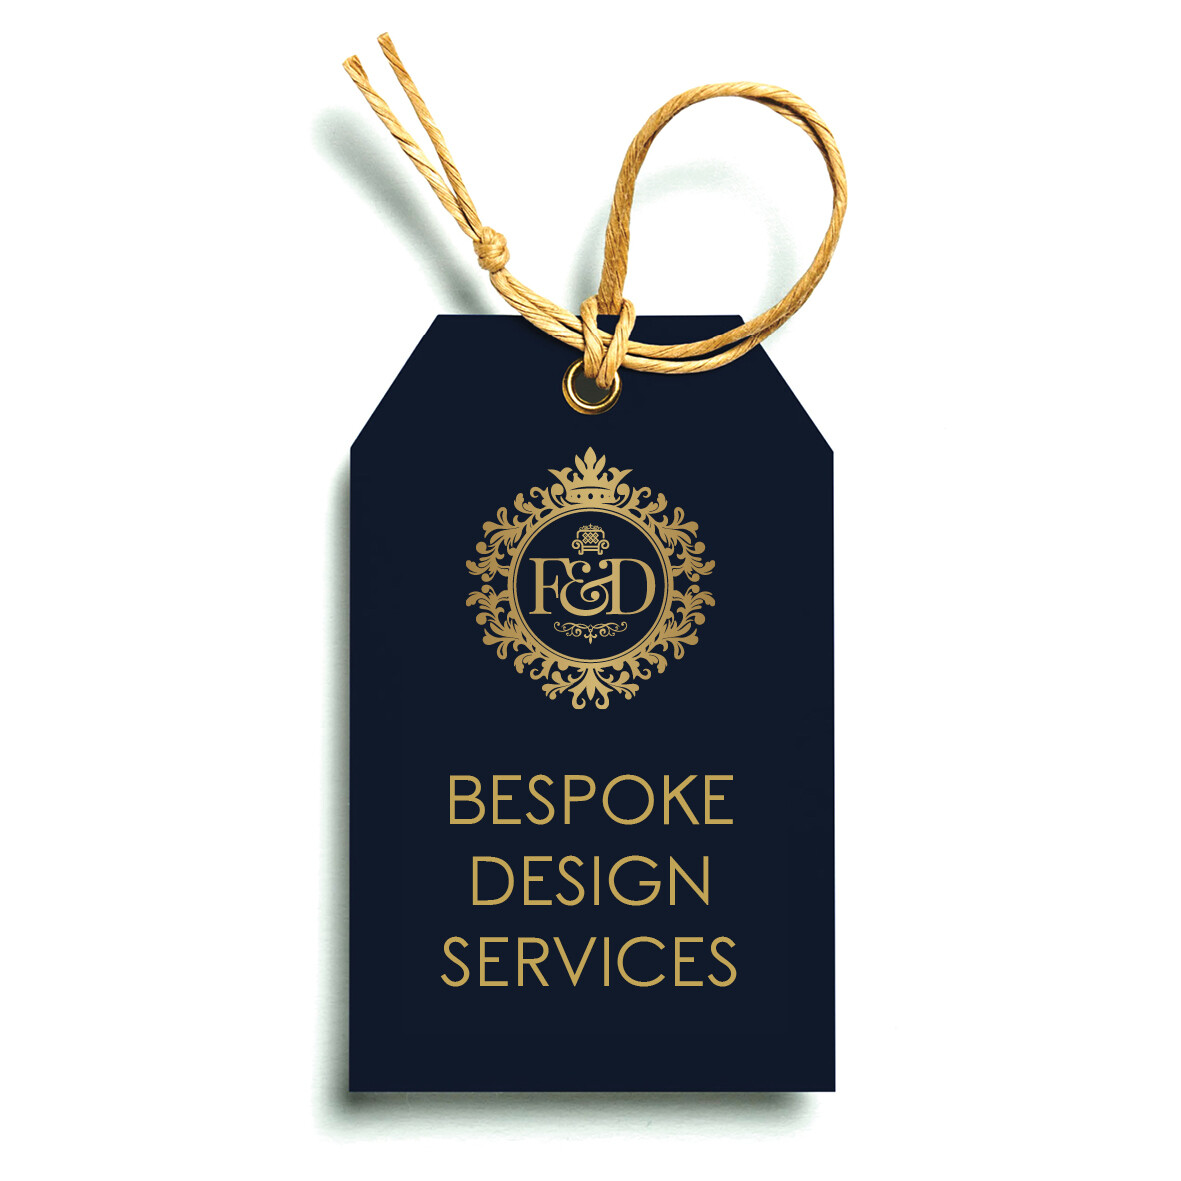 Bespoke Design Services